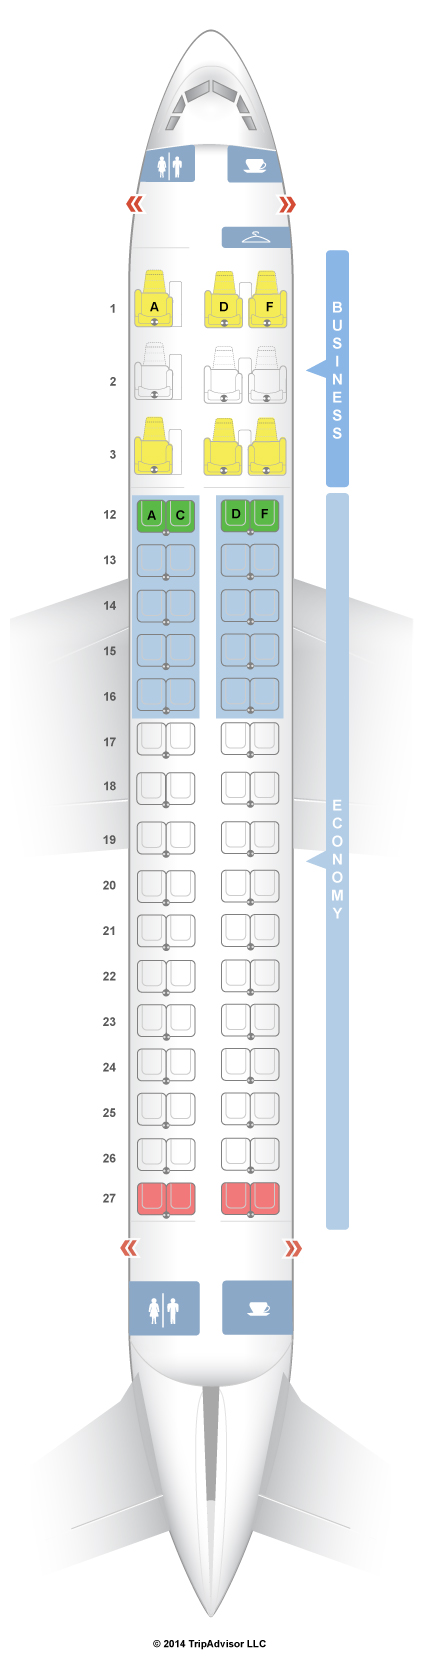 Air Canada 763 Seating Chart